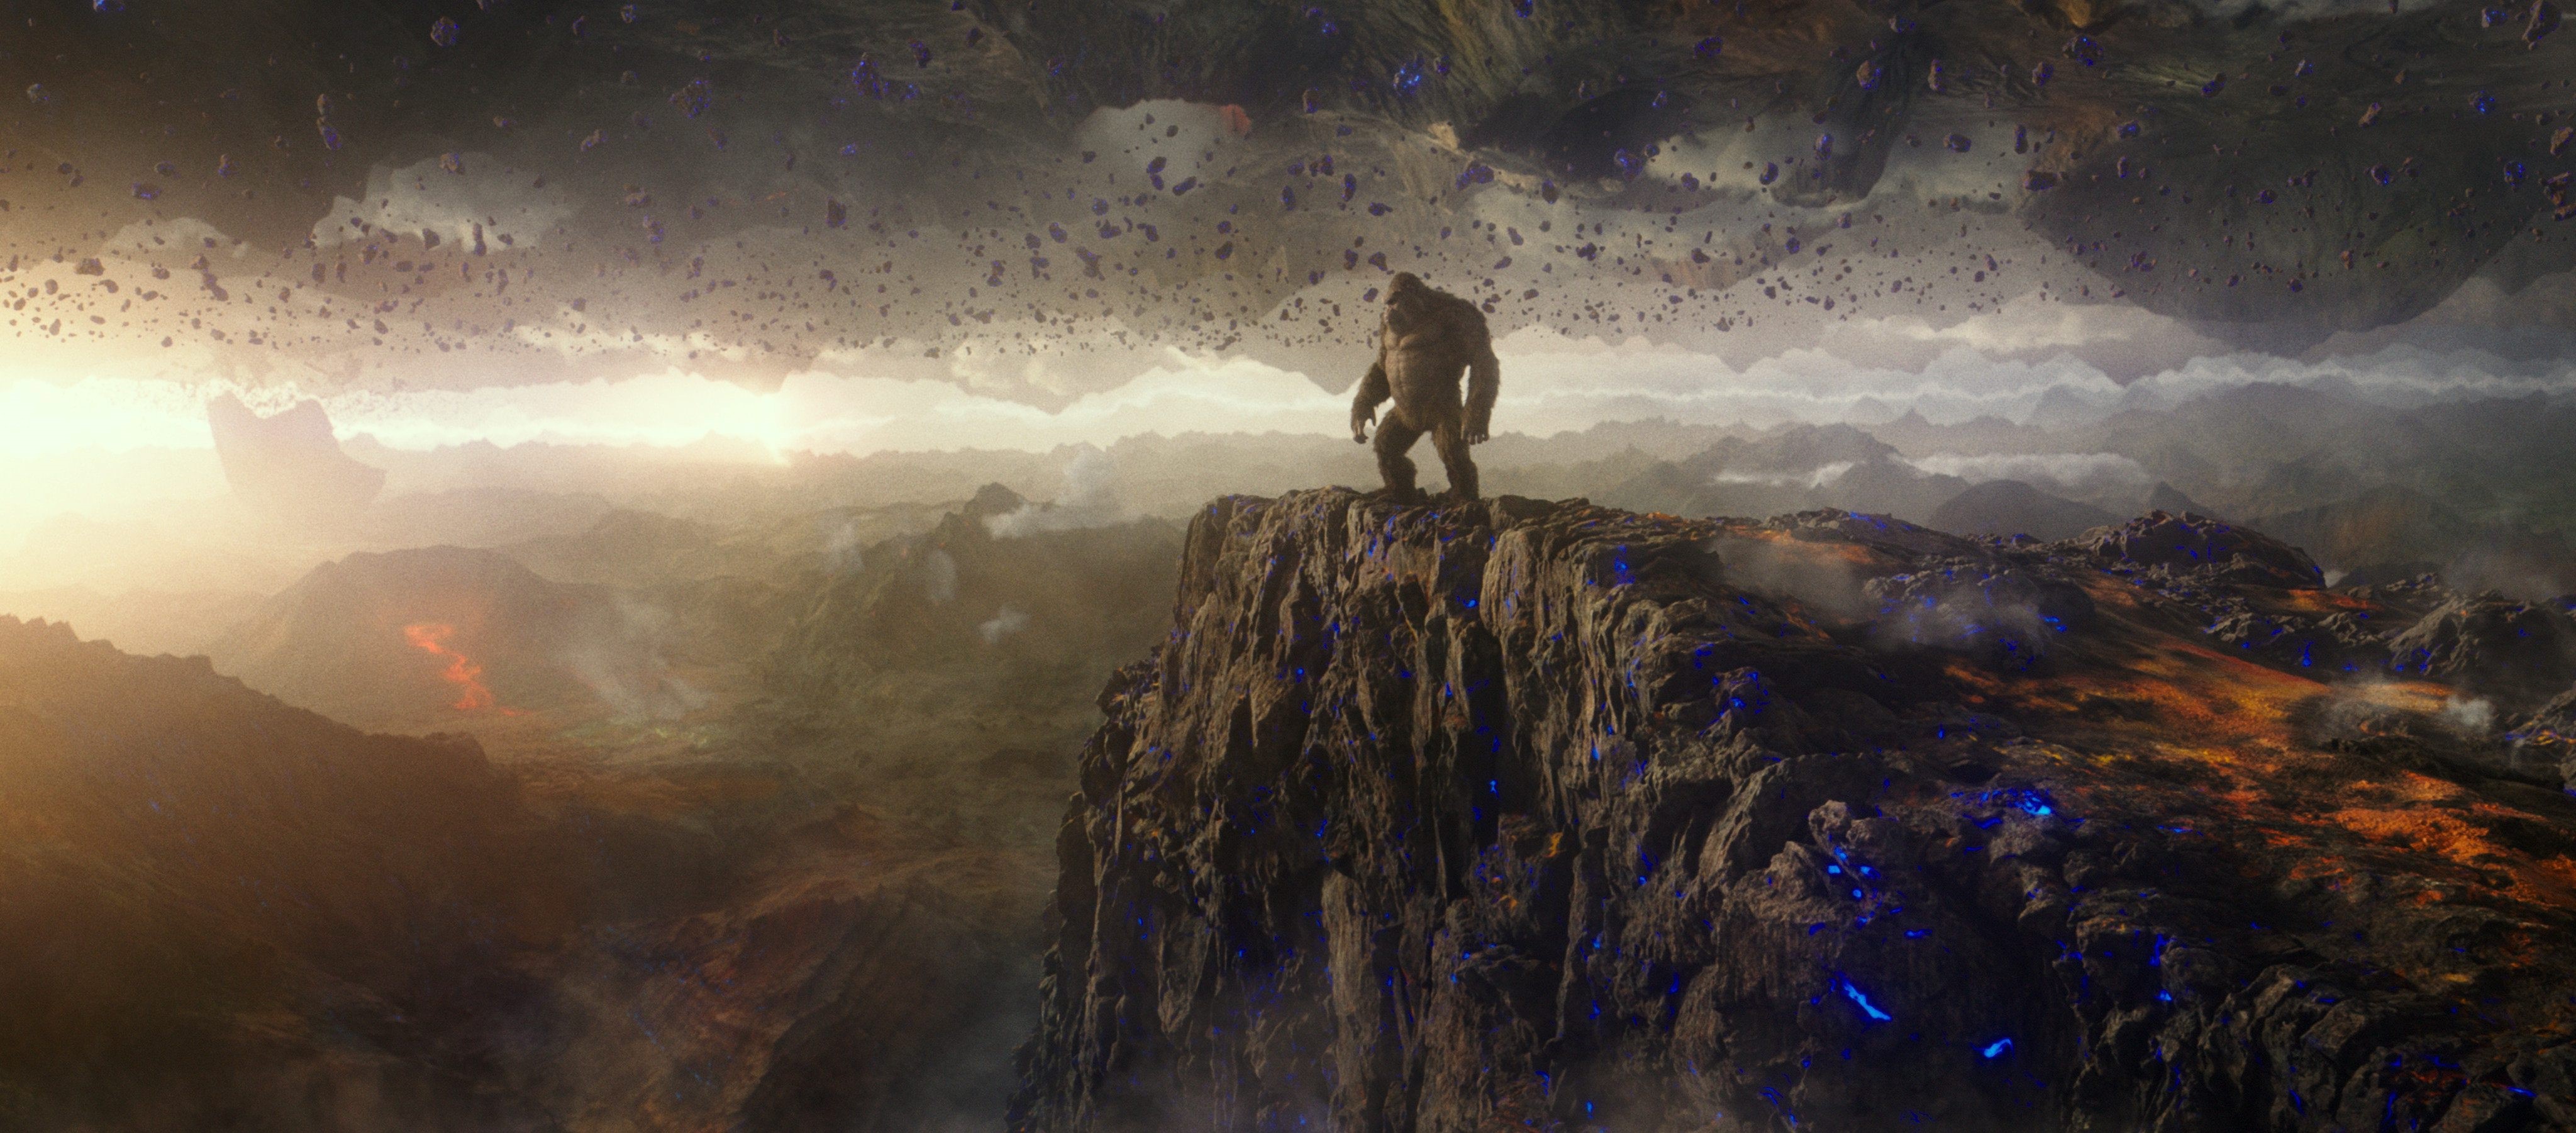 Review: Once more unto the breach in 'Godzilla vs. Kong' - North Shore News